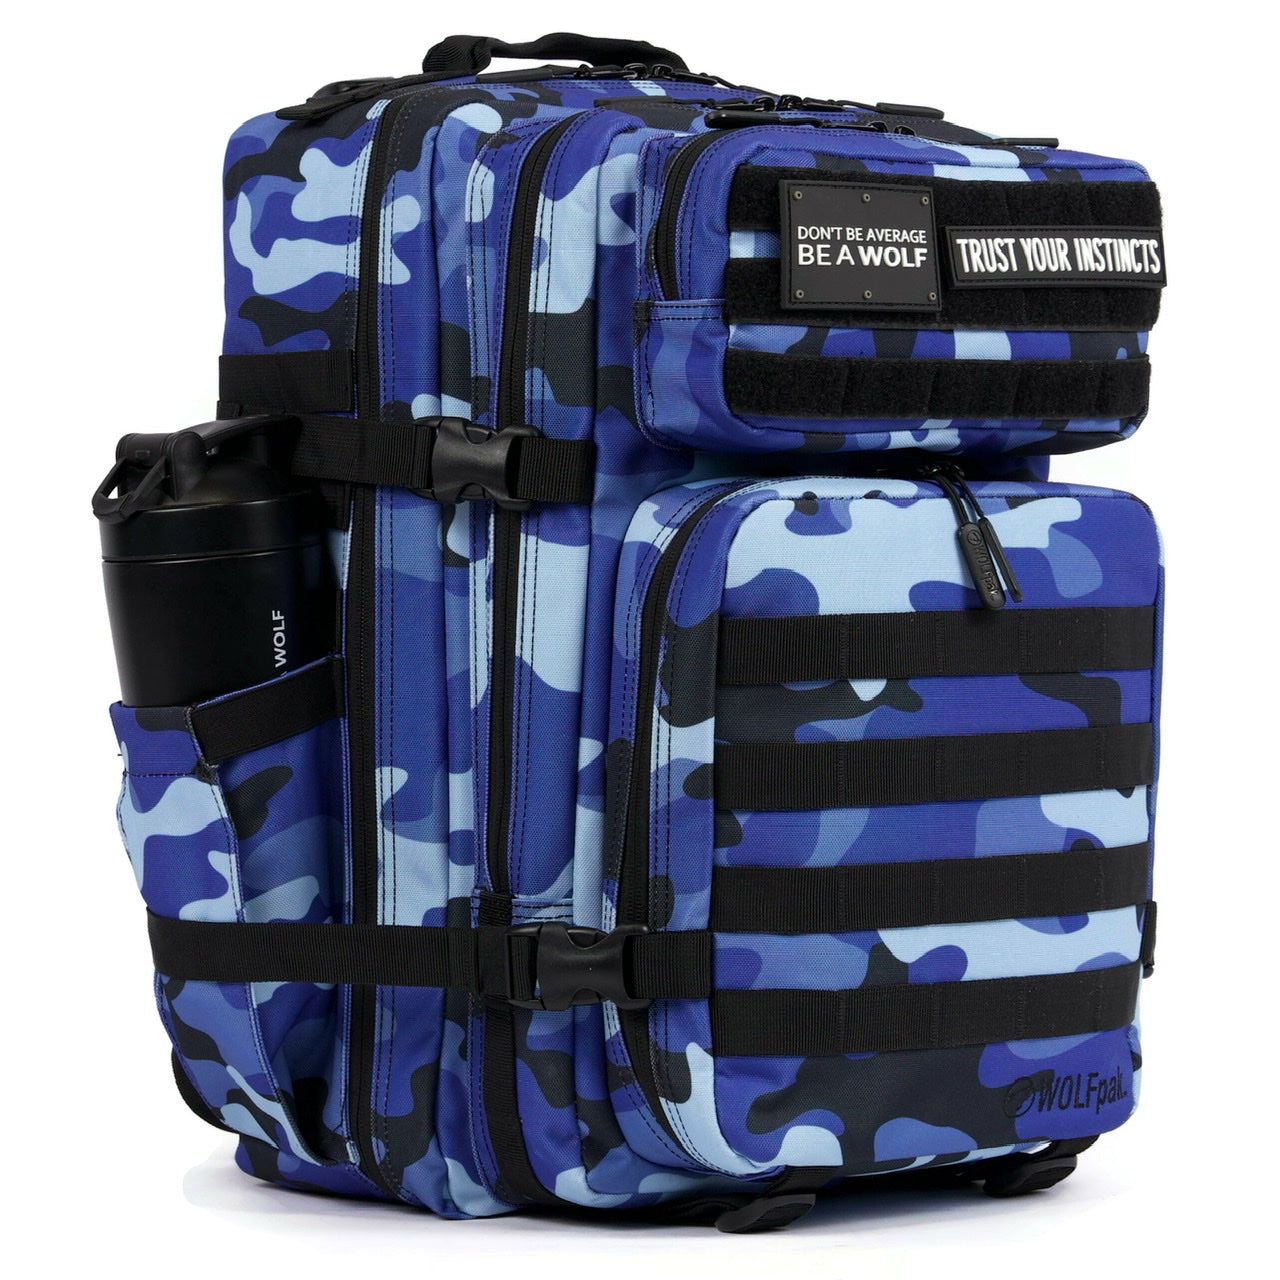 45L Navy Camo Meal Prep Management Backpack